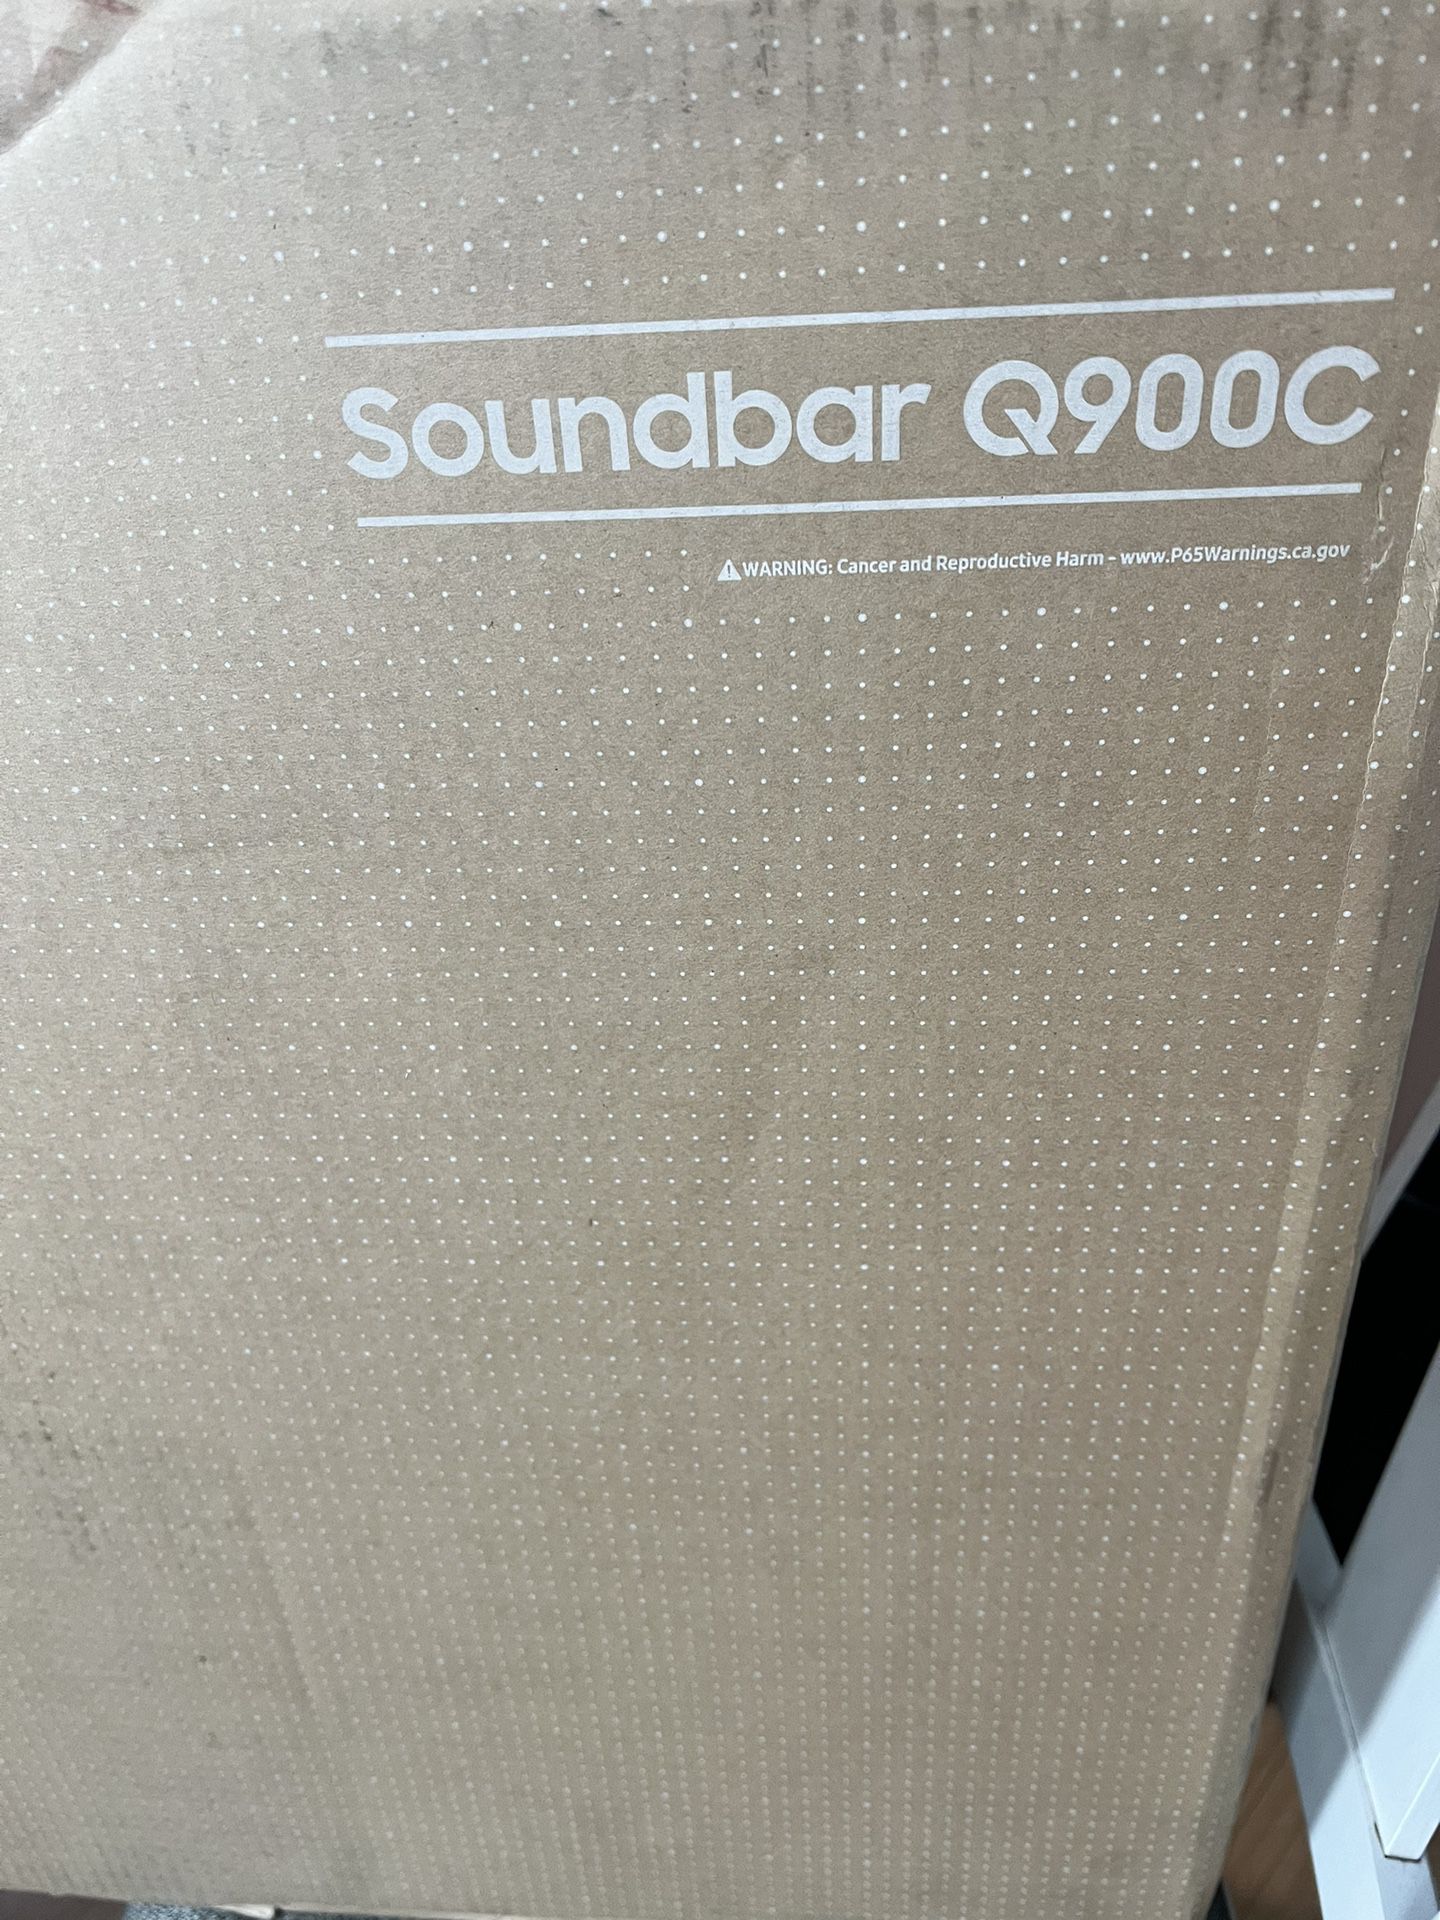 Brand New Samsung Q900C Soundbar